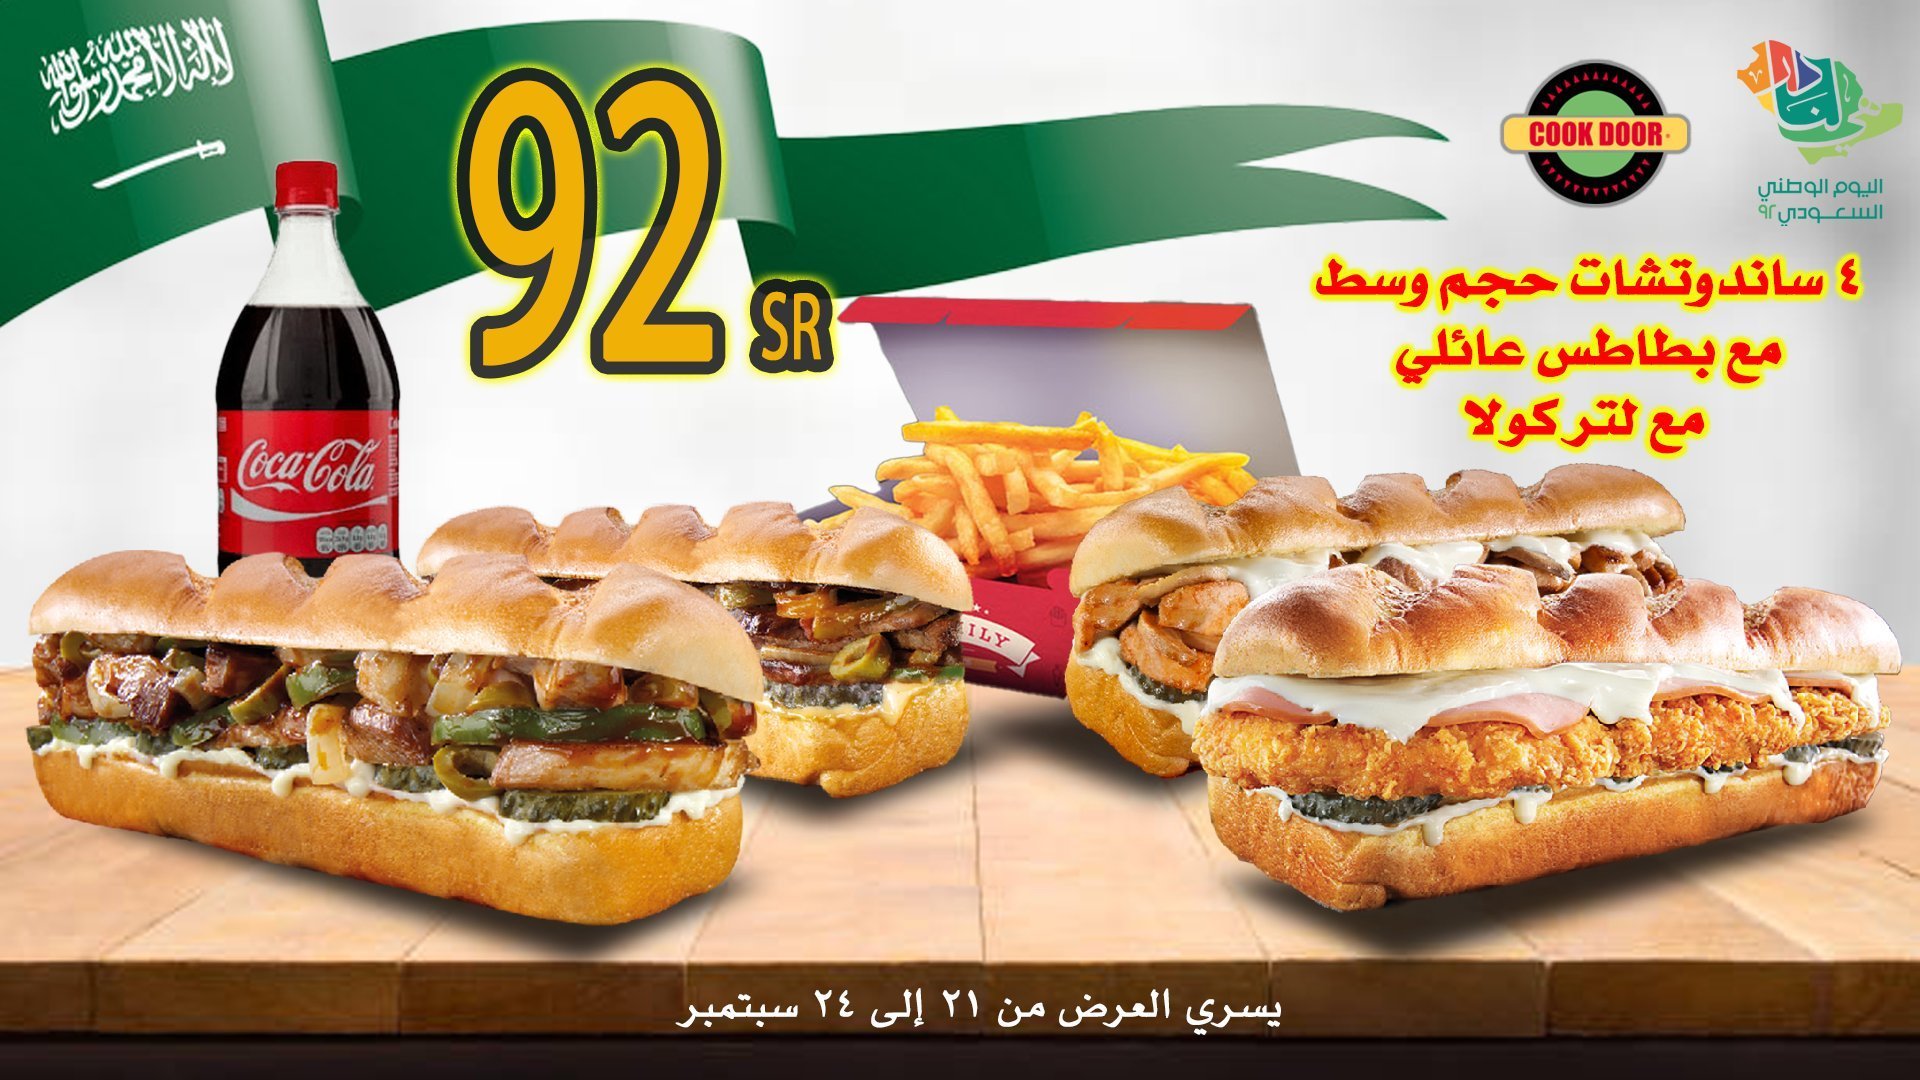 FdBLgcQX0AAT85f - عروض اليوم الوطني 92 : عروض مطاعم السعودية (محدث بالعروض الجديدة)